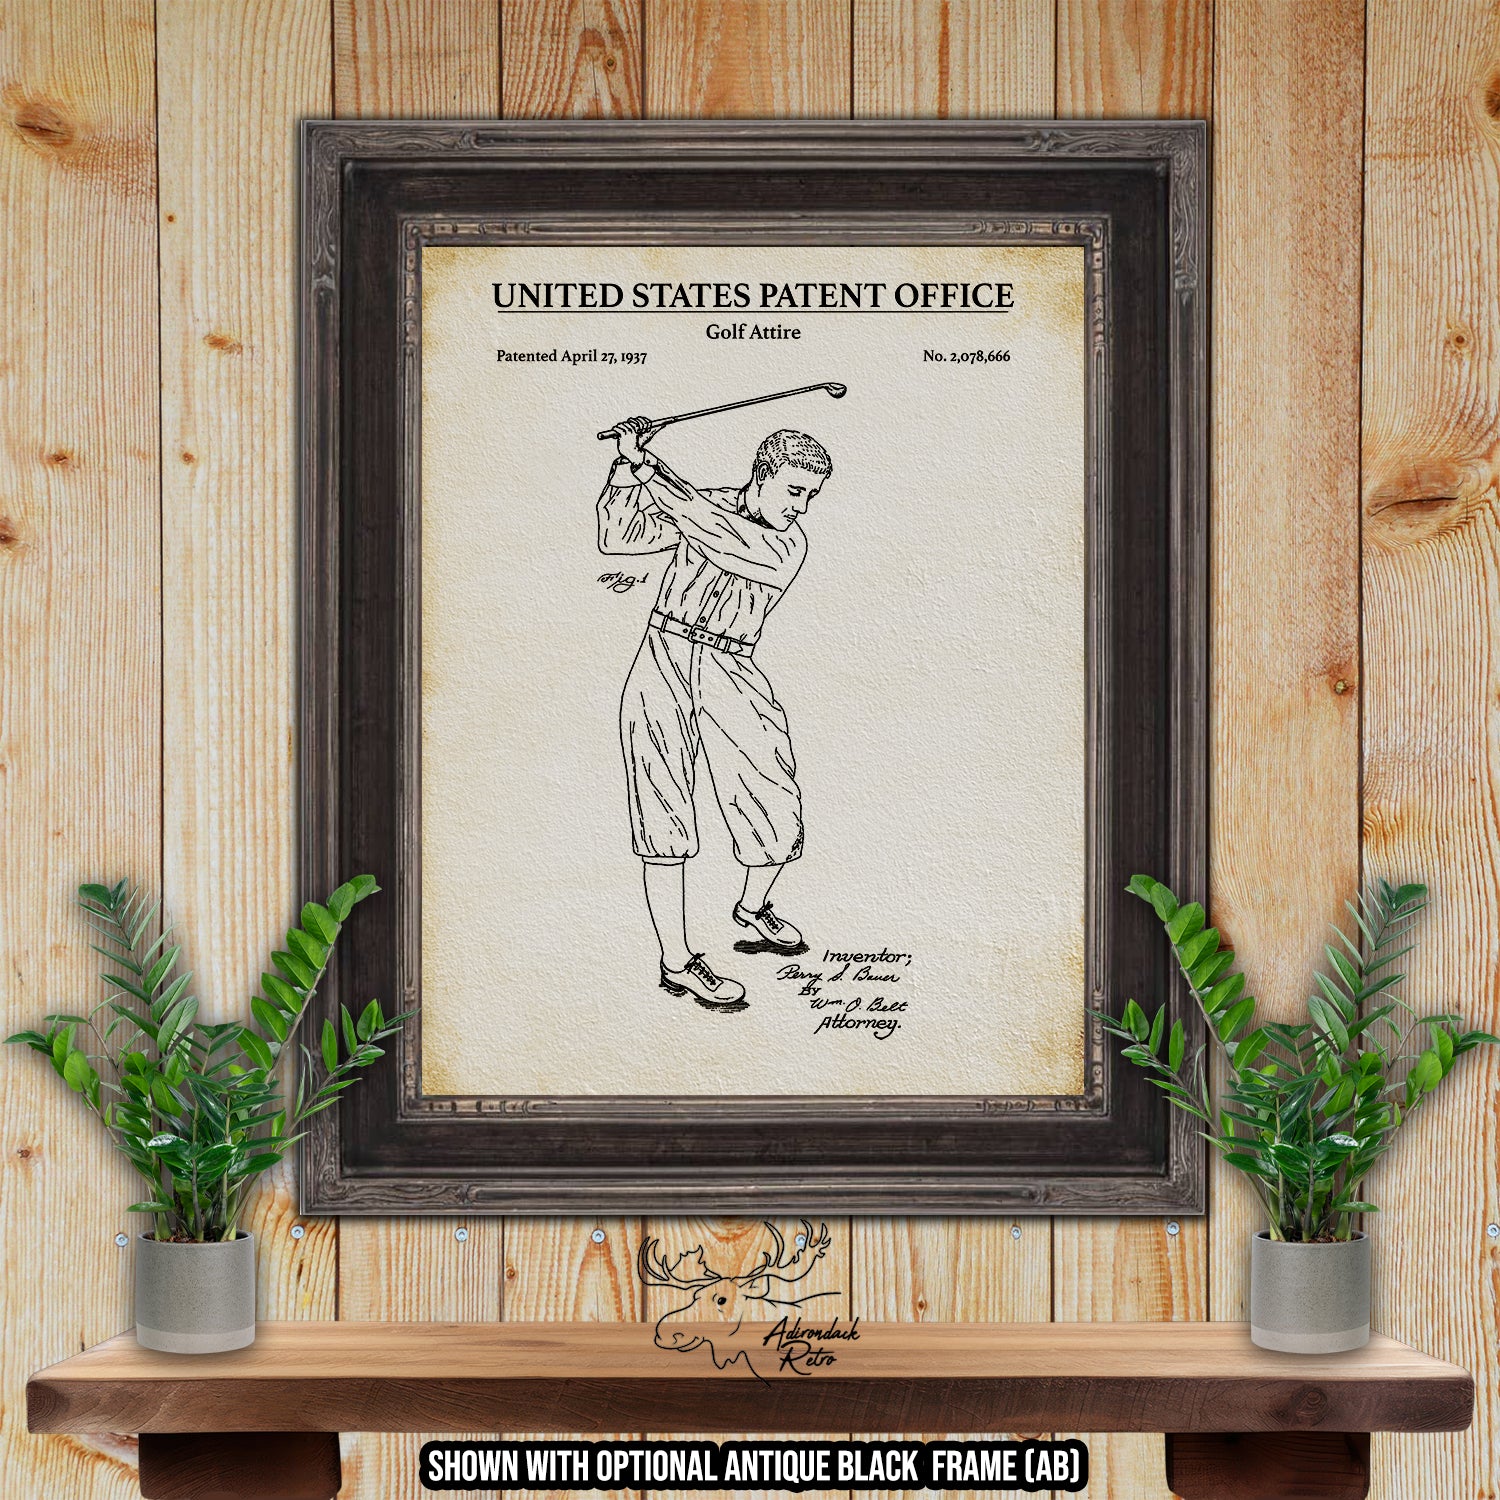 Golf Attire 1937 Patent Print at Adirondack Retro